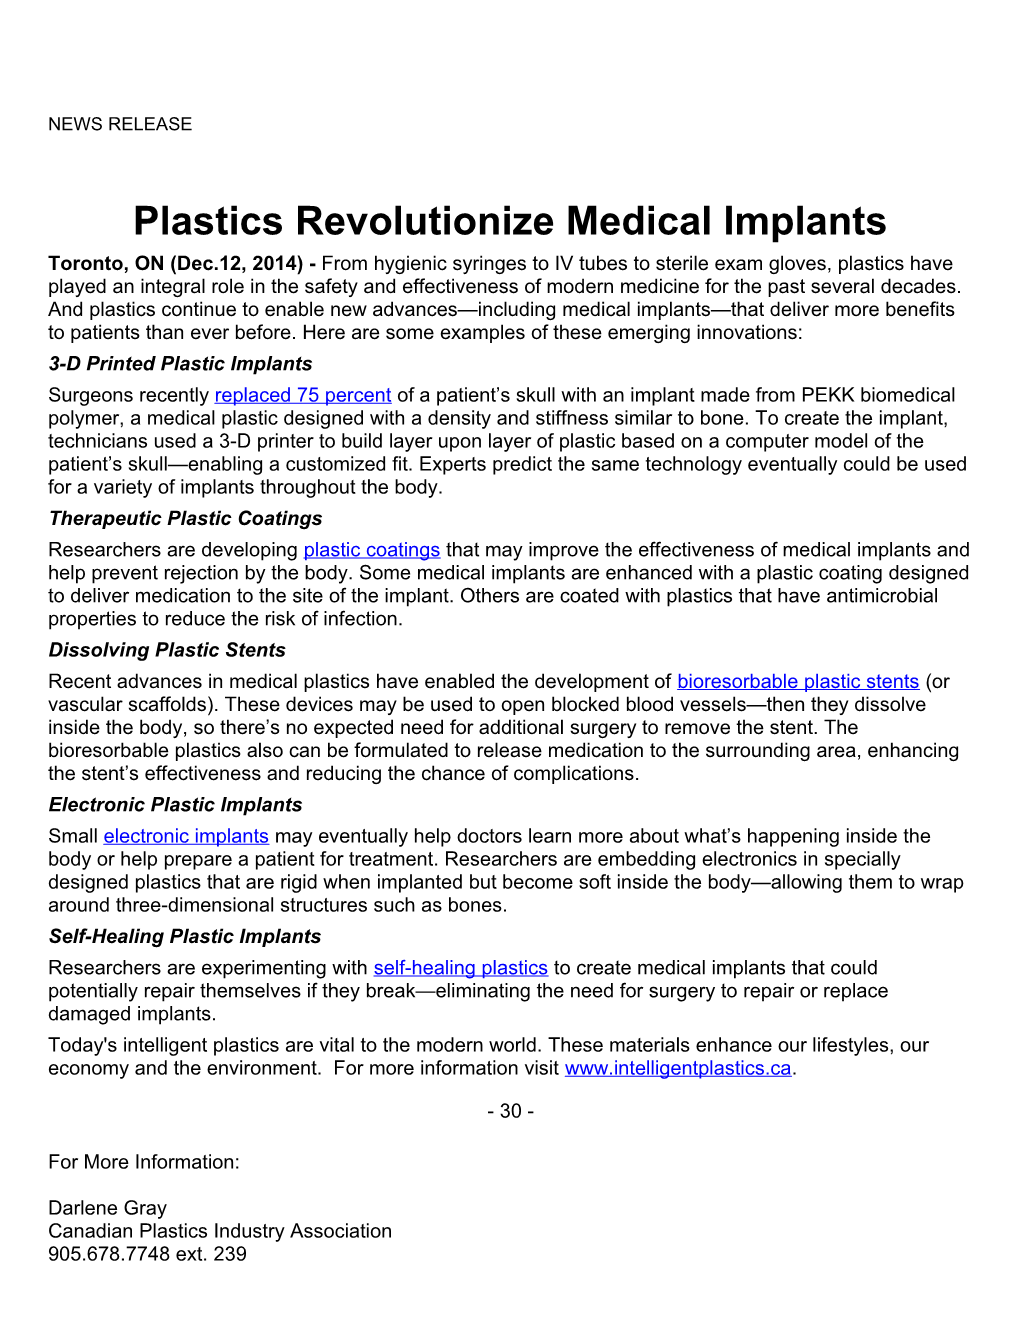 Plastics Revolutionize Medical Implants